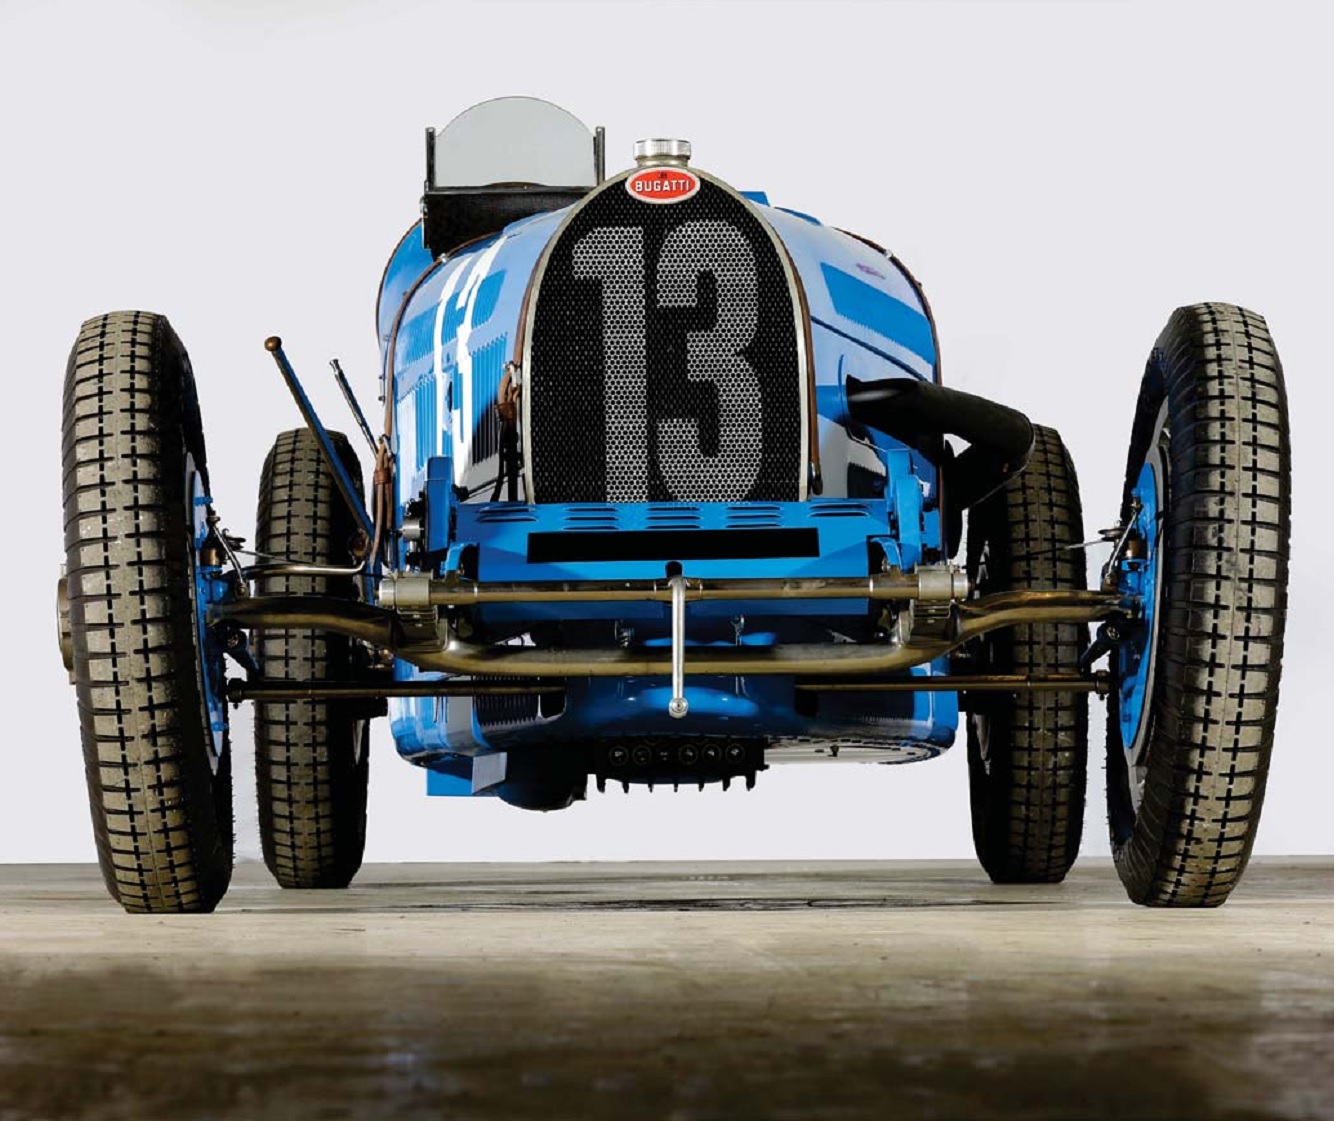 Bugatti Type 51